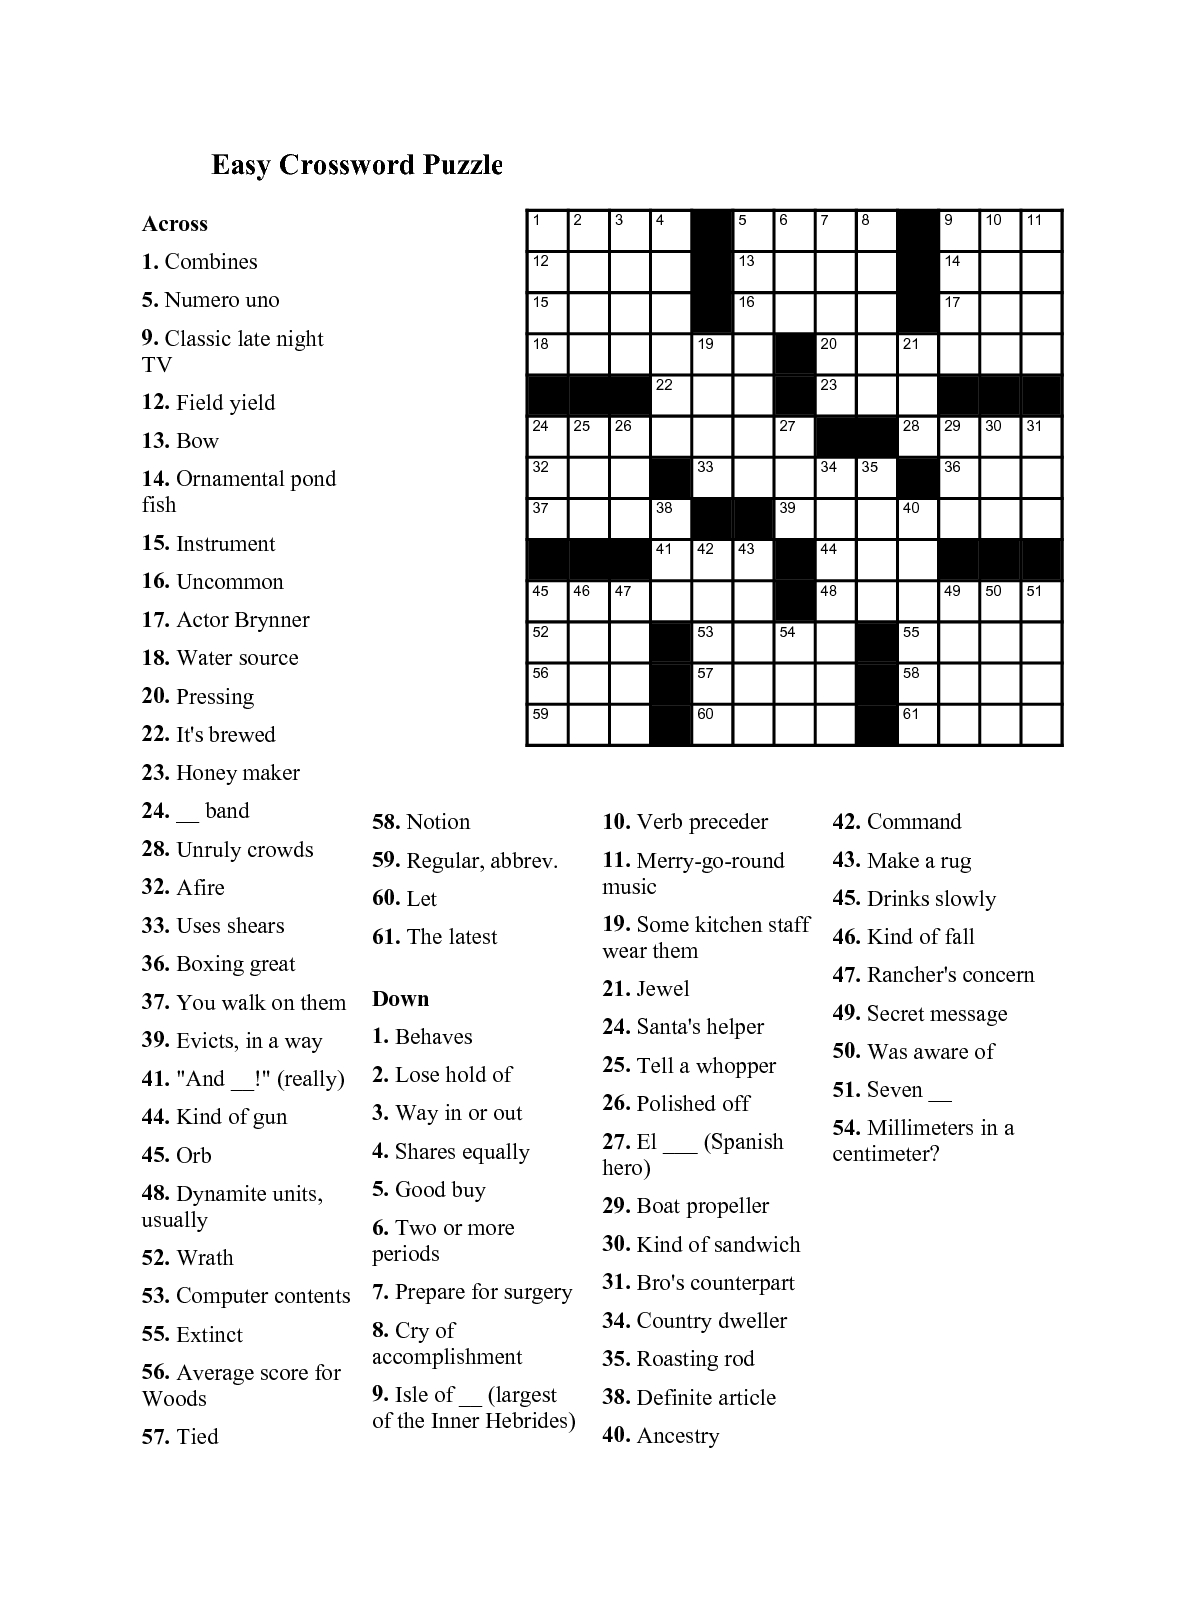 Easy Crossword Puzzles For Seniors | Activity Shelter - Free Printable Easy Crossword Puzzles